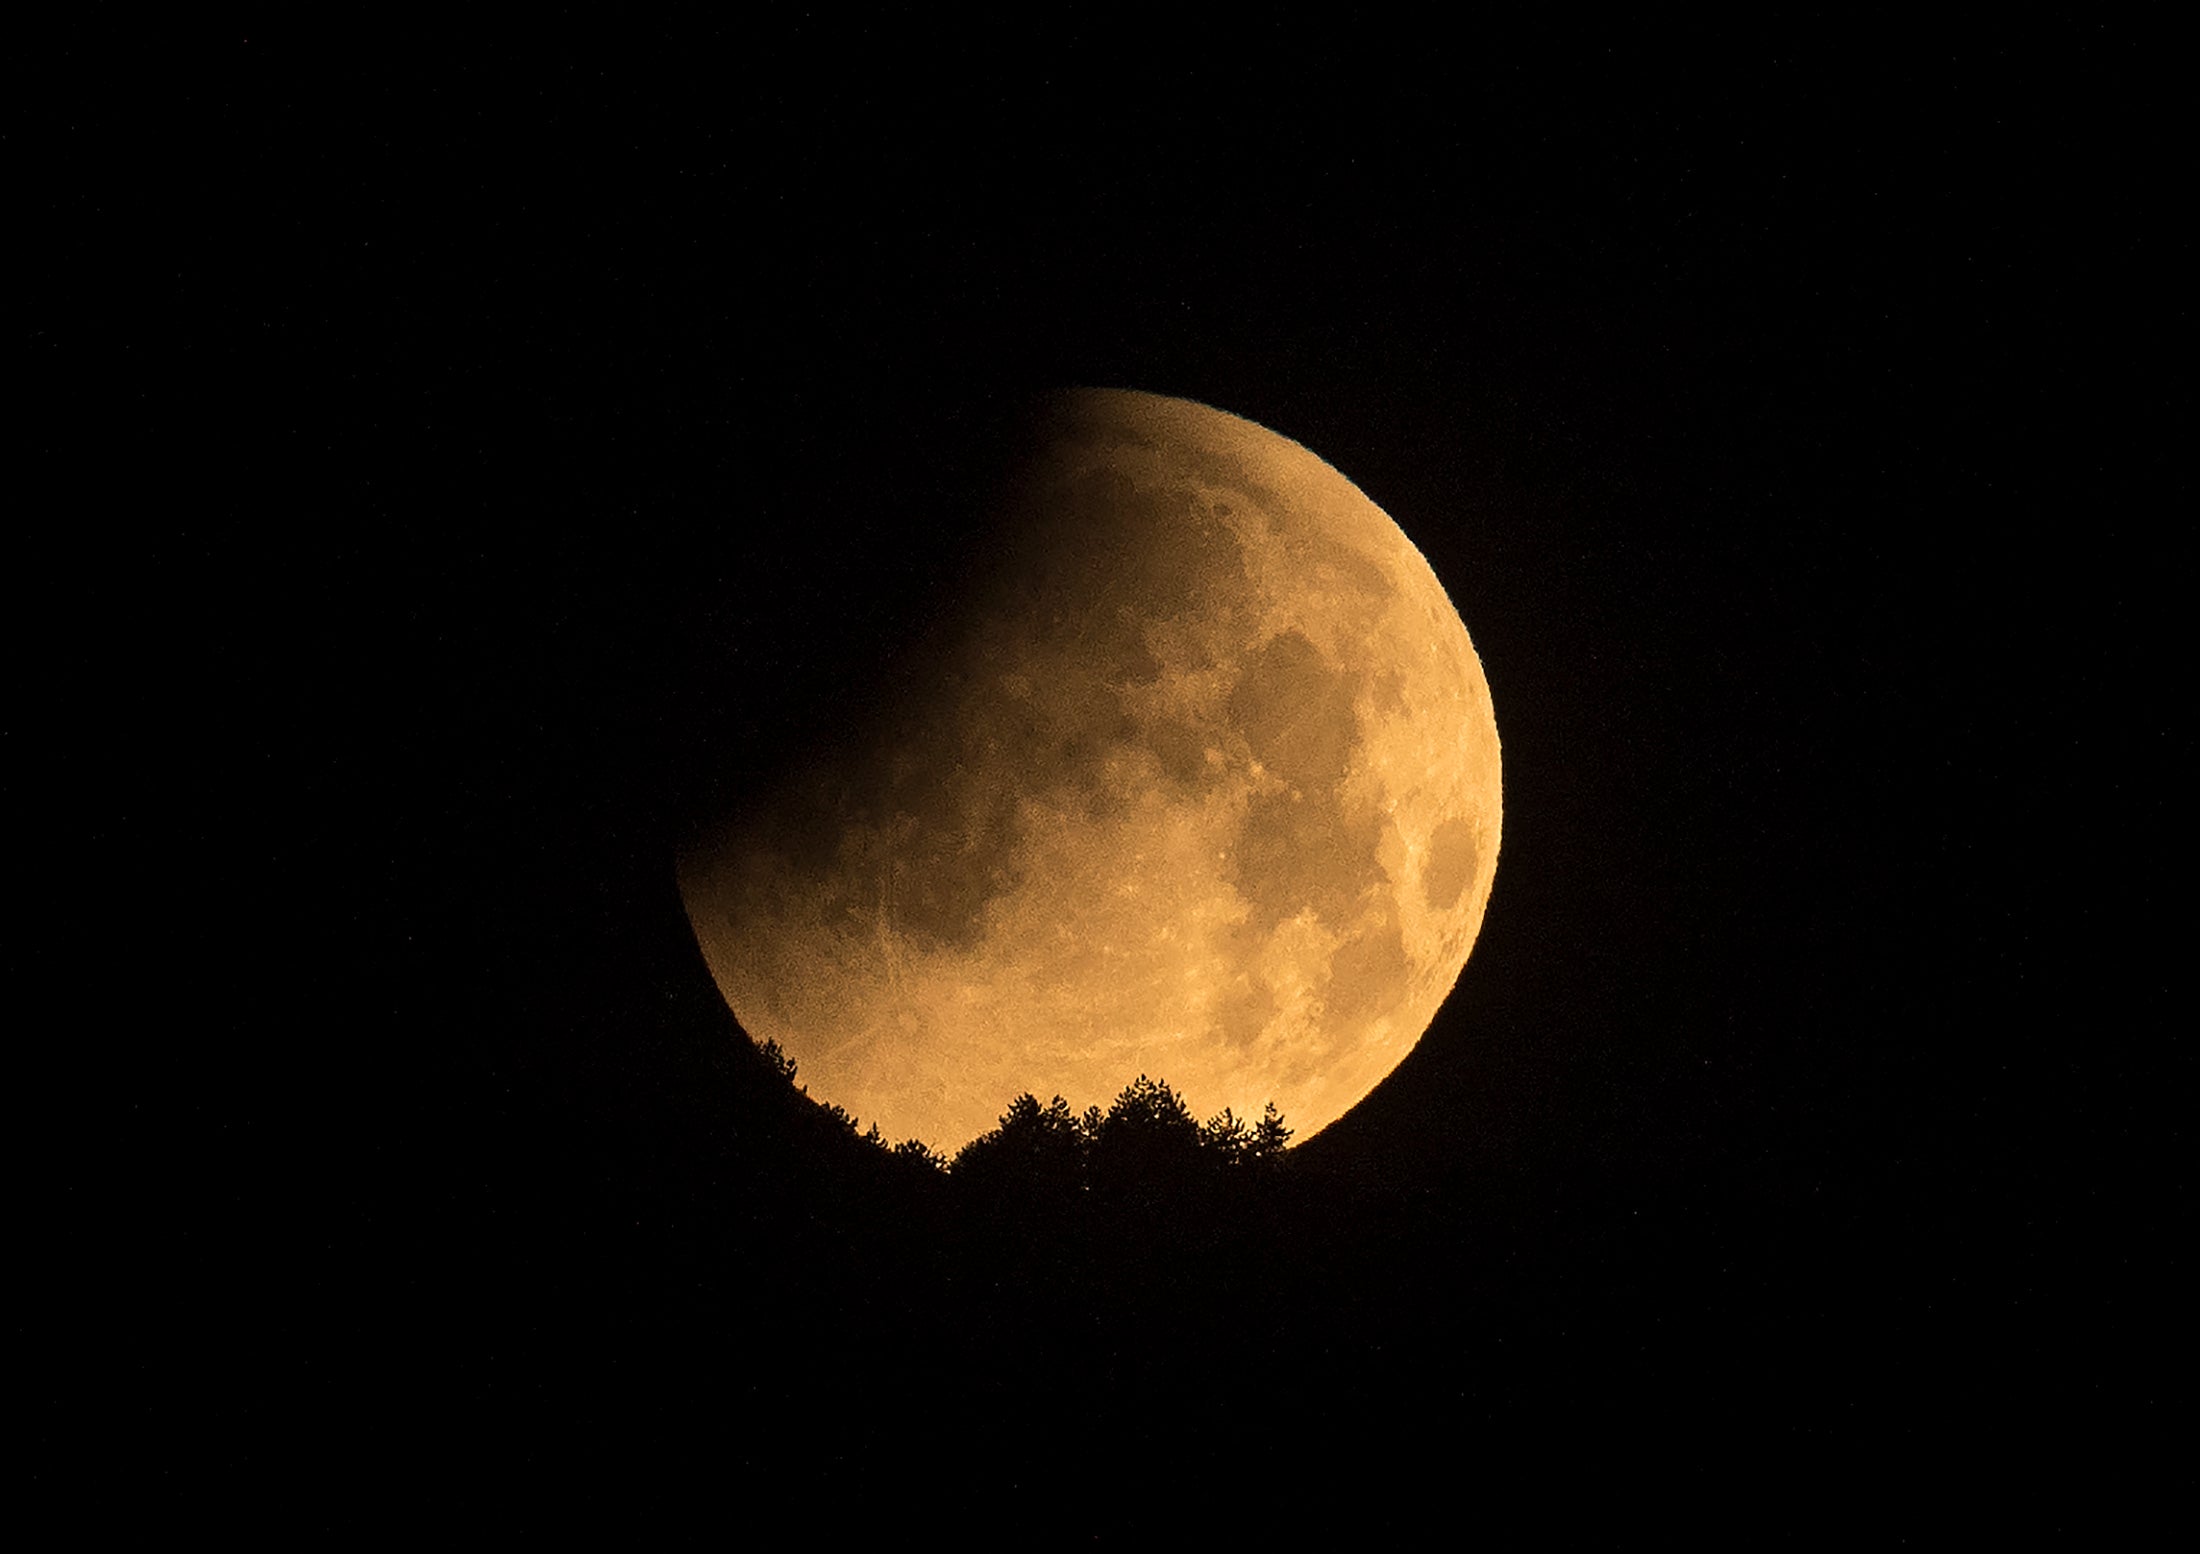 lunar eclipse 2022 nasa